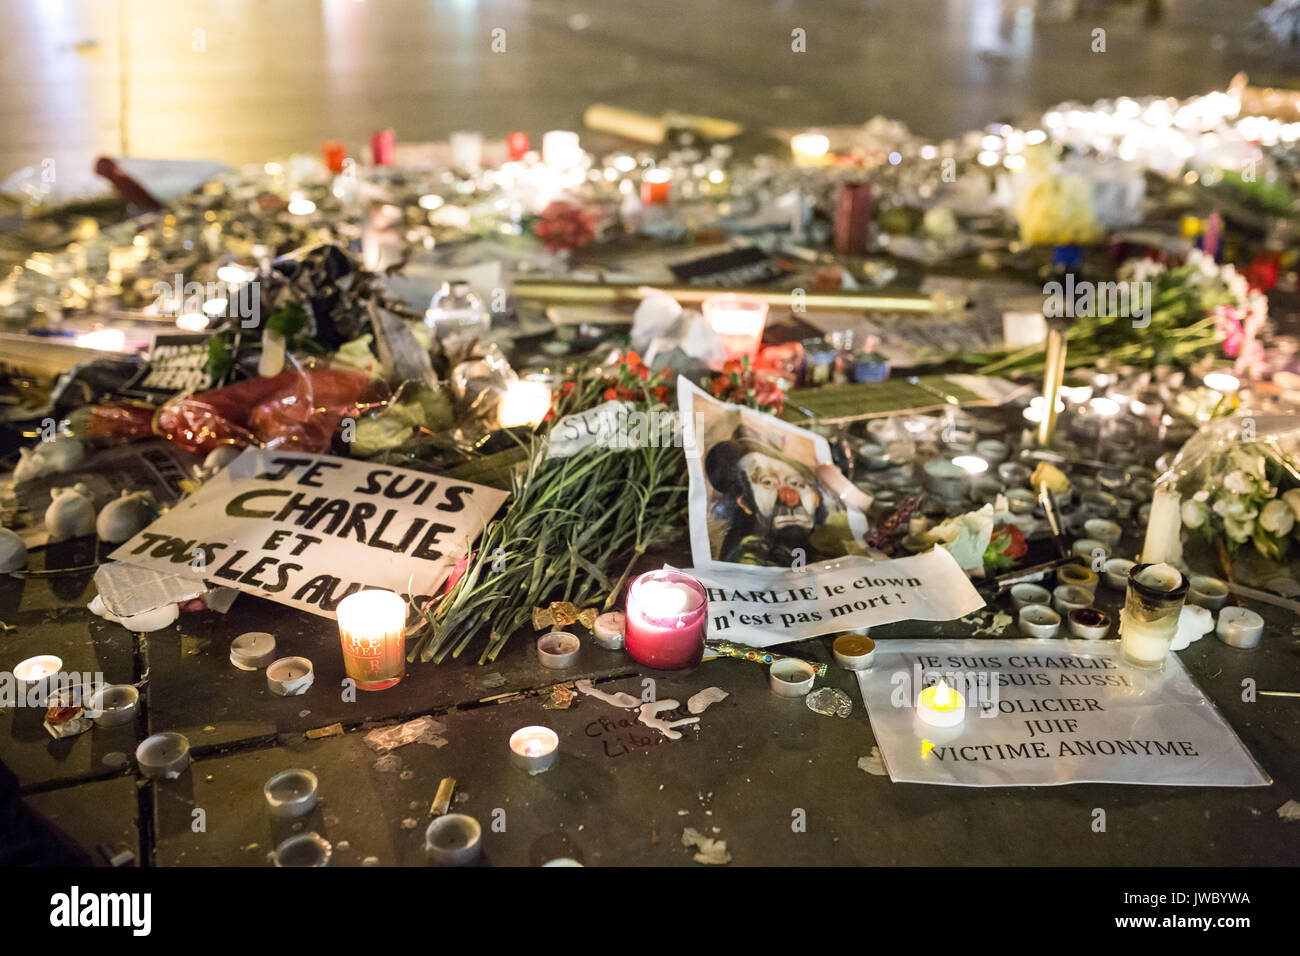 je suis charlie, je suis le policier. Le clown n'est pas mort. Homage at the victims of Charlie hebdo killing in Paris the 7th of january 2015. Stock Photo